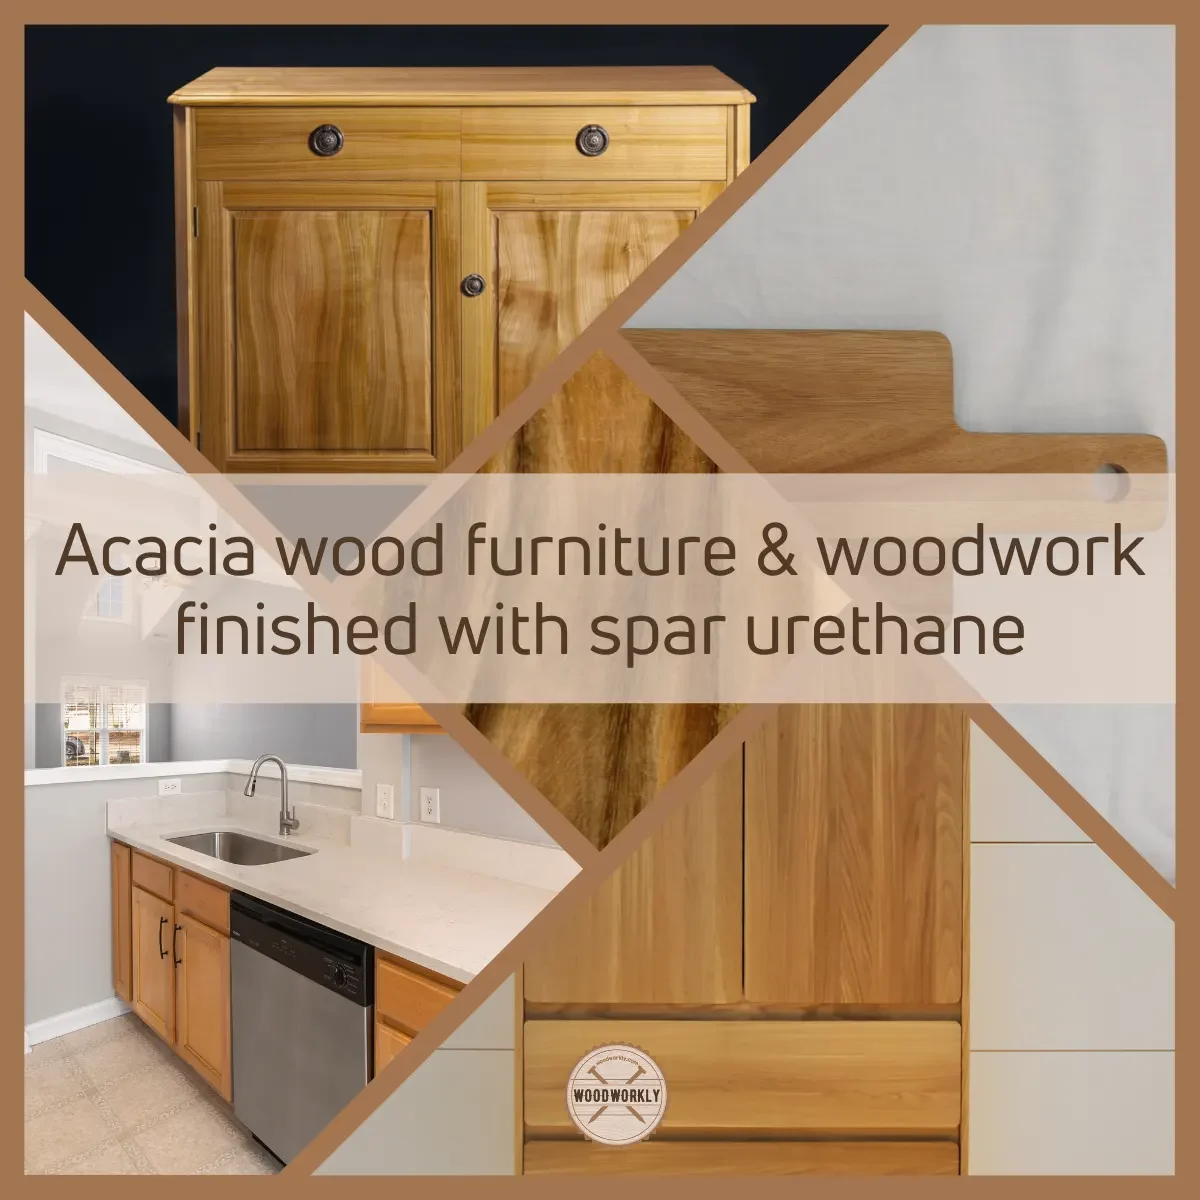 Acacia wood furniture & woodwork finished with spar urethane